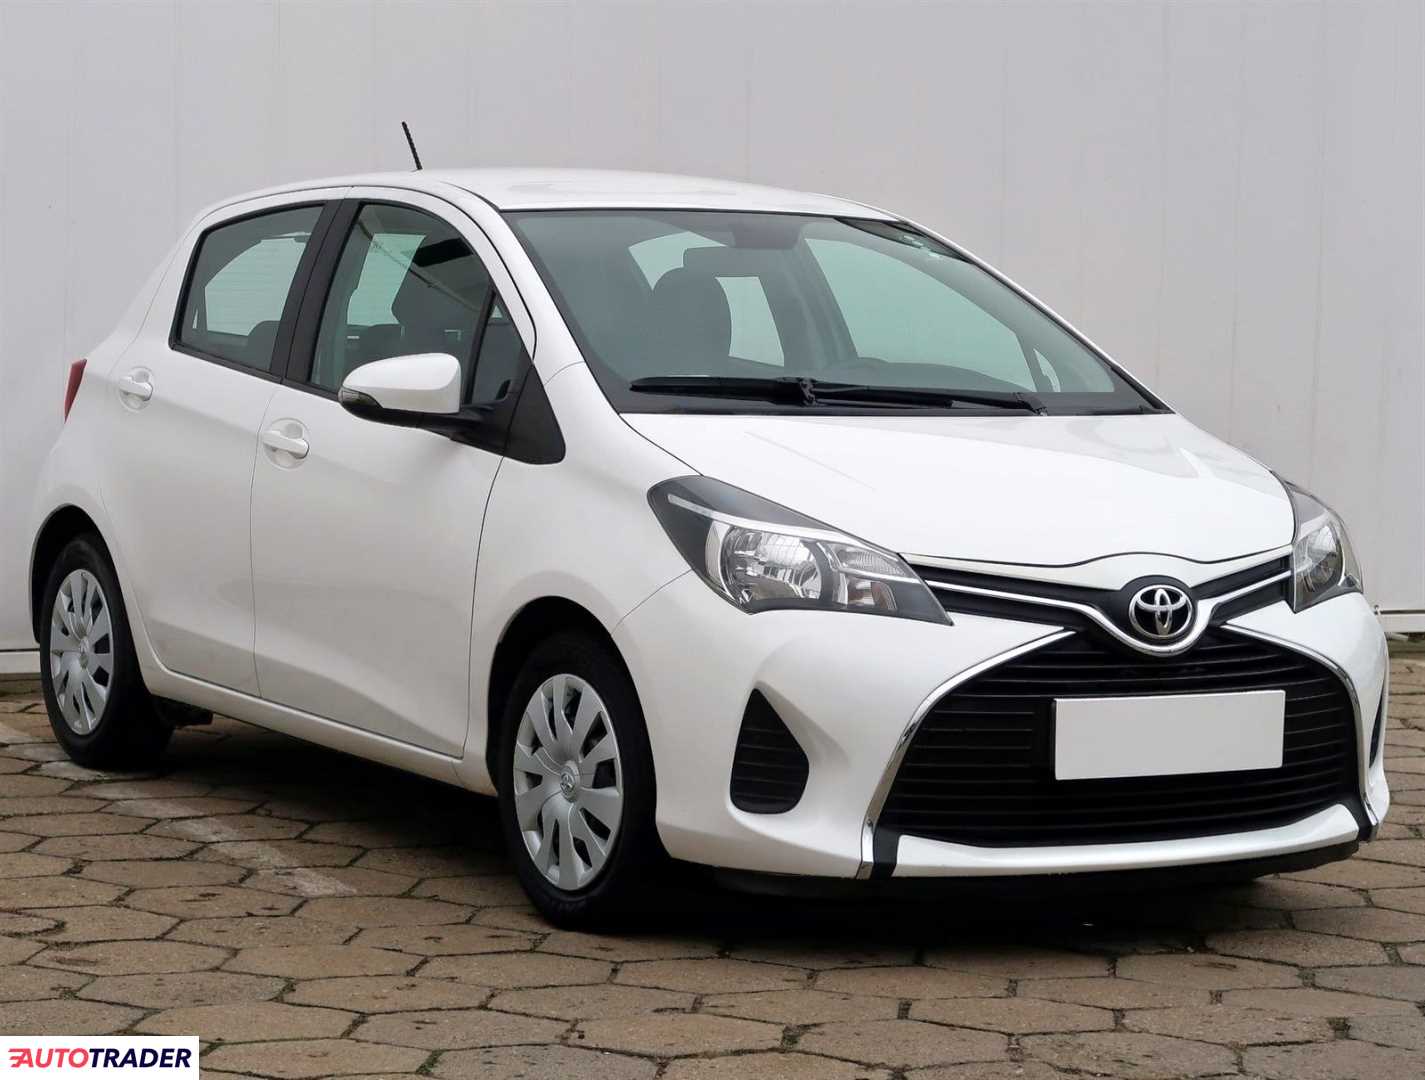 Toyota Yaris 2016 1.0 68 KM